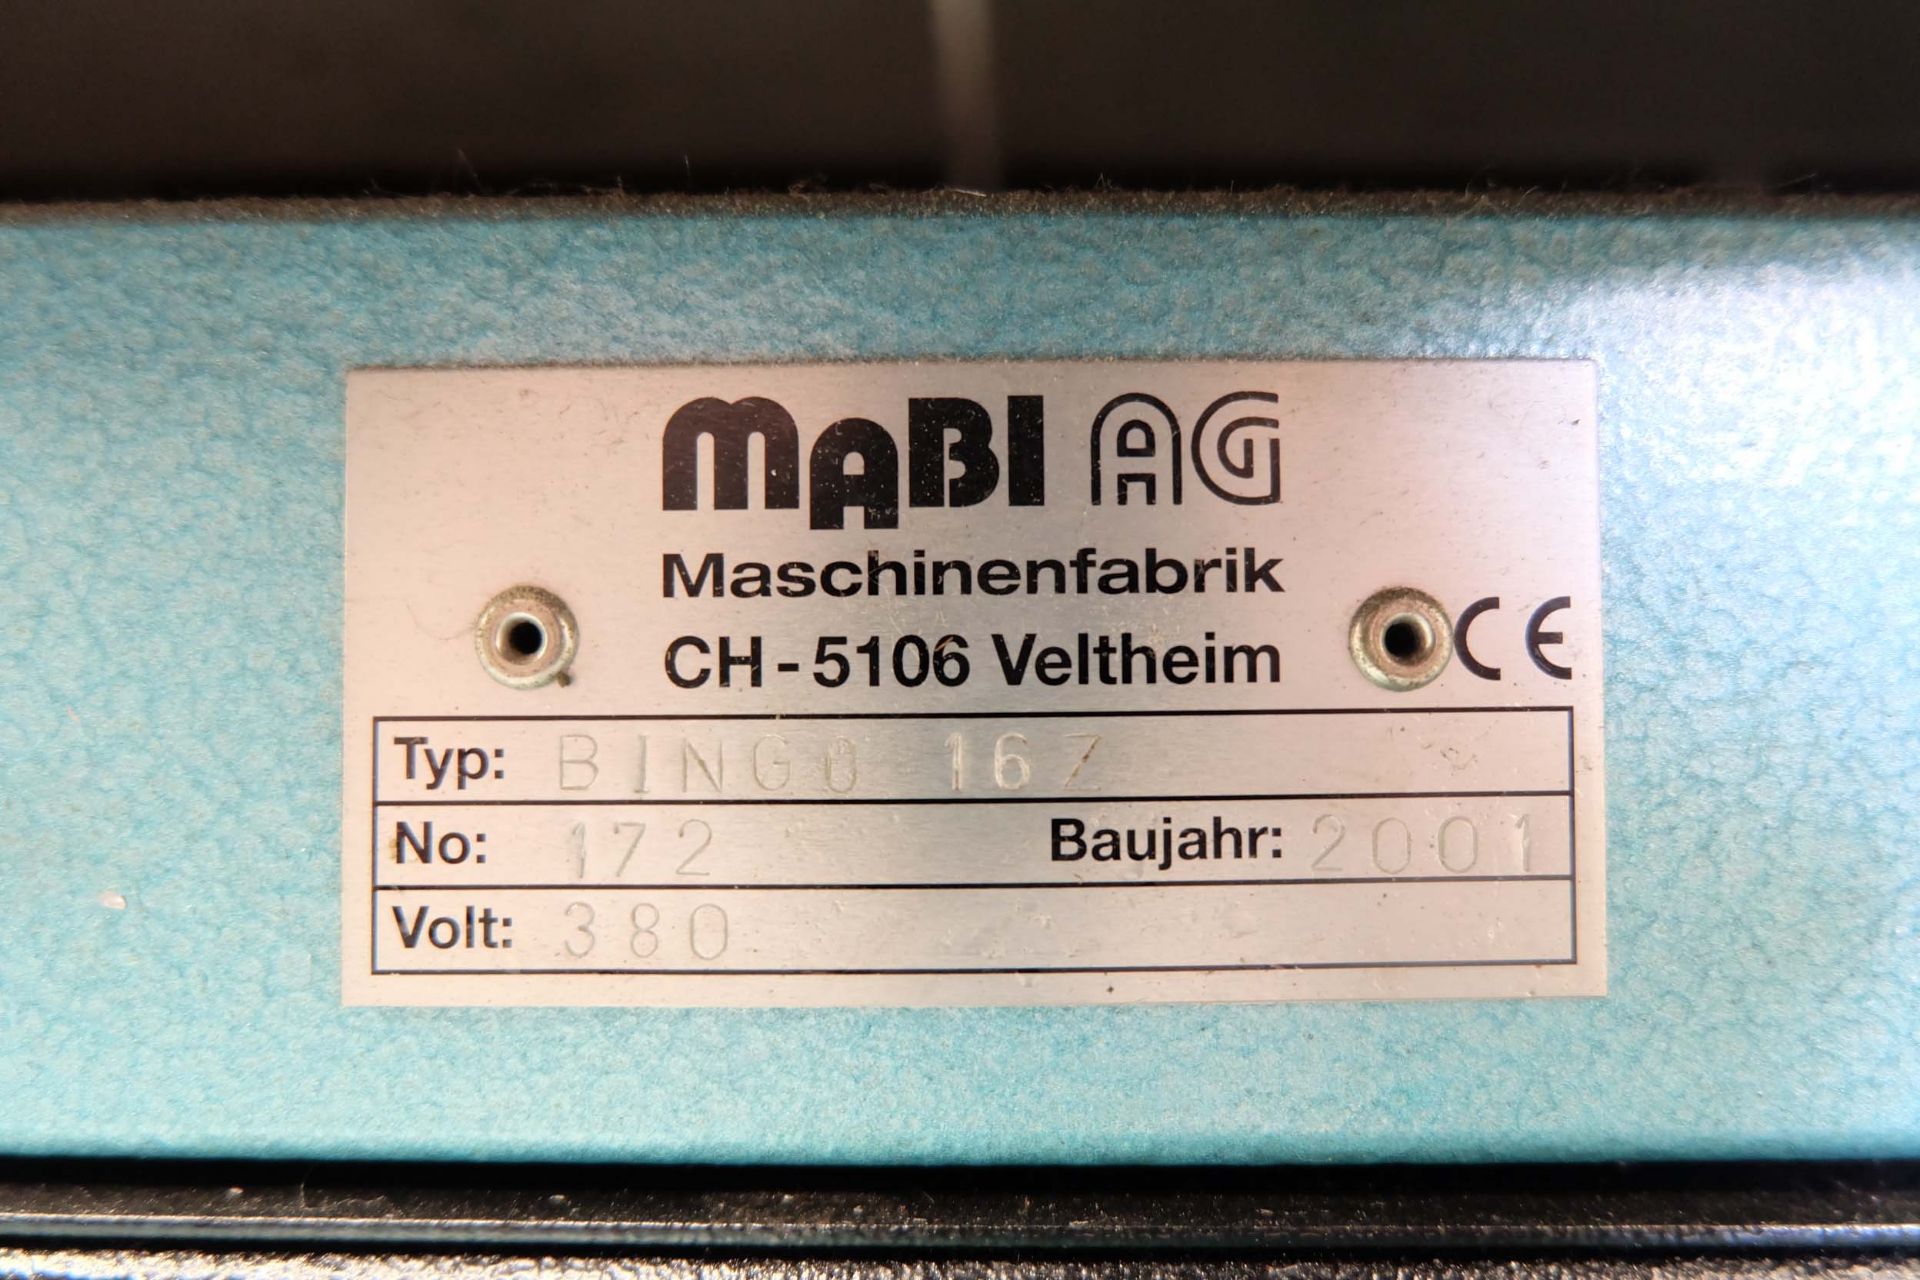 MABI - Bingo 16Z CNC Sheet Metal Processing System For Tube Profiling & Cutting. Capacity 1000mm x 1 - Image 8 of 17